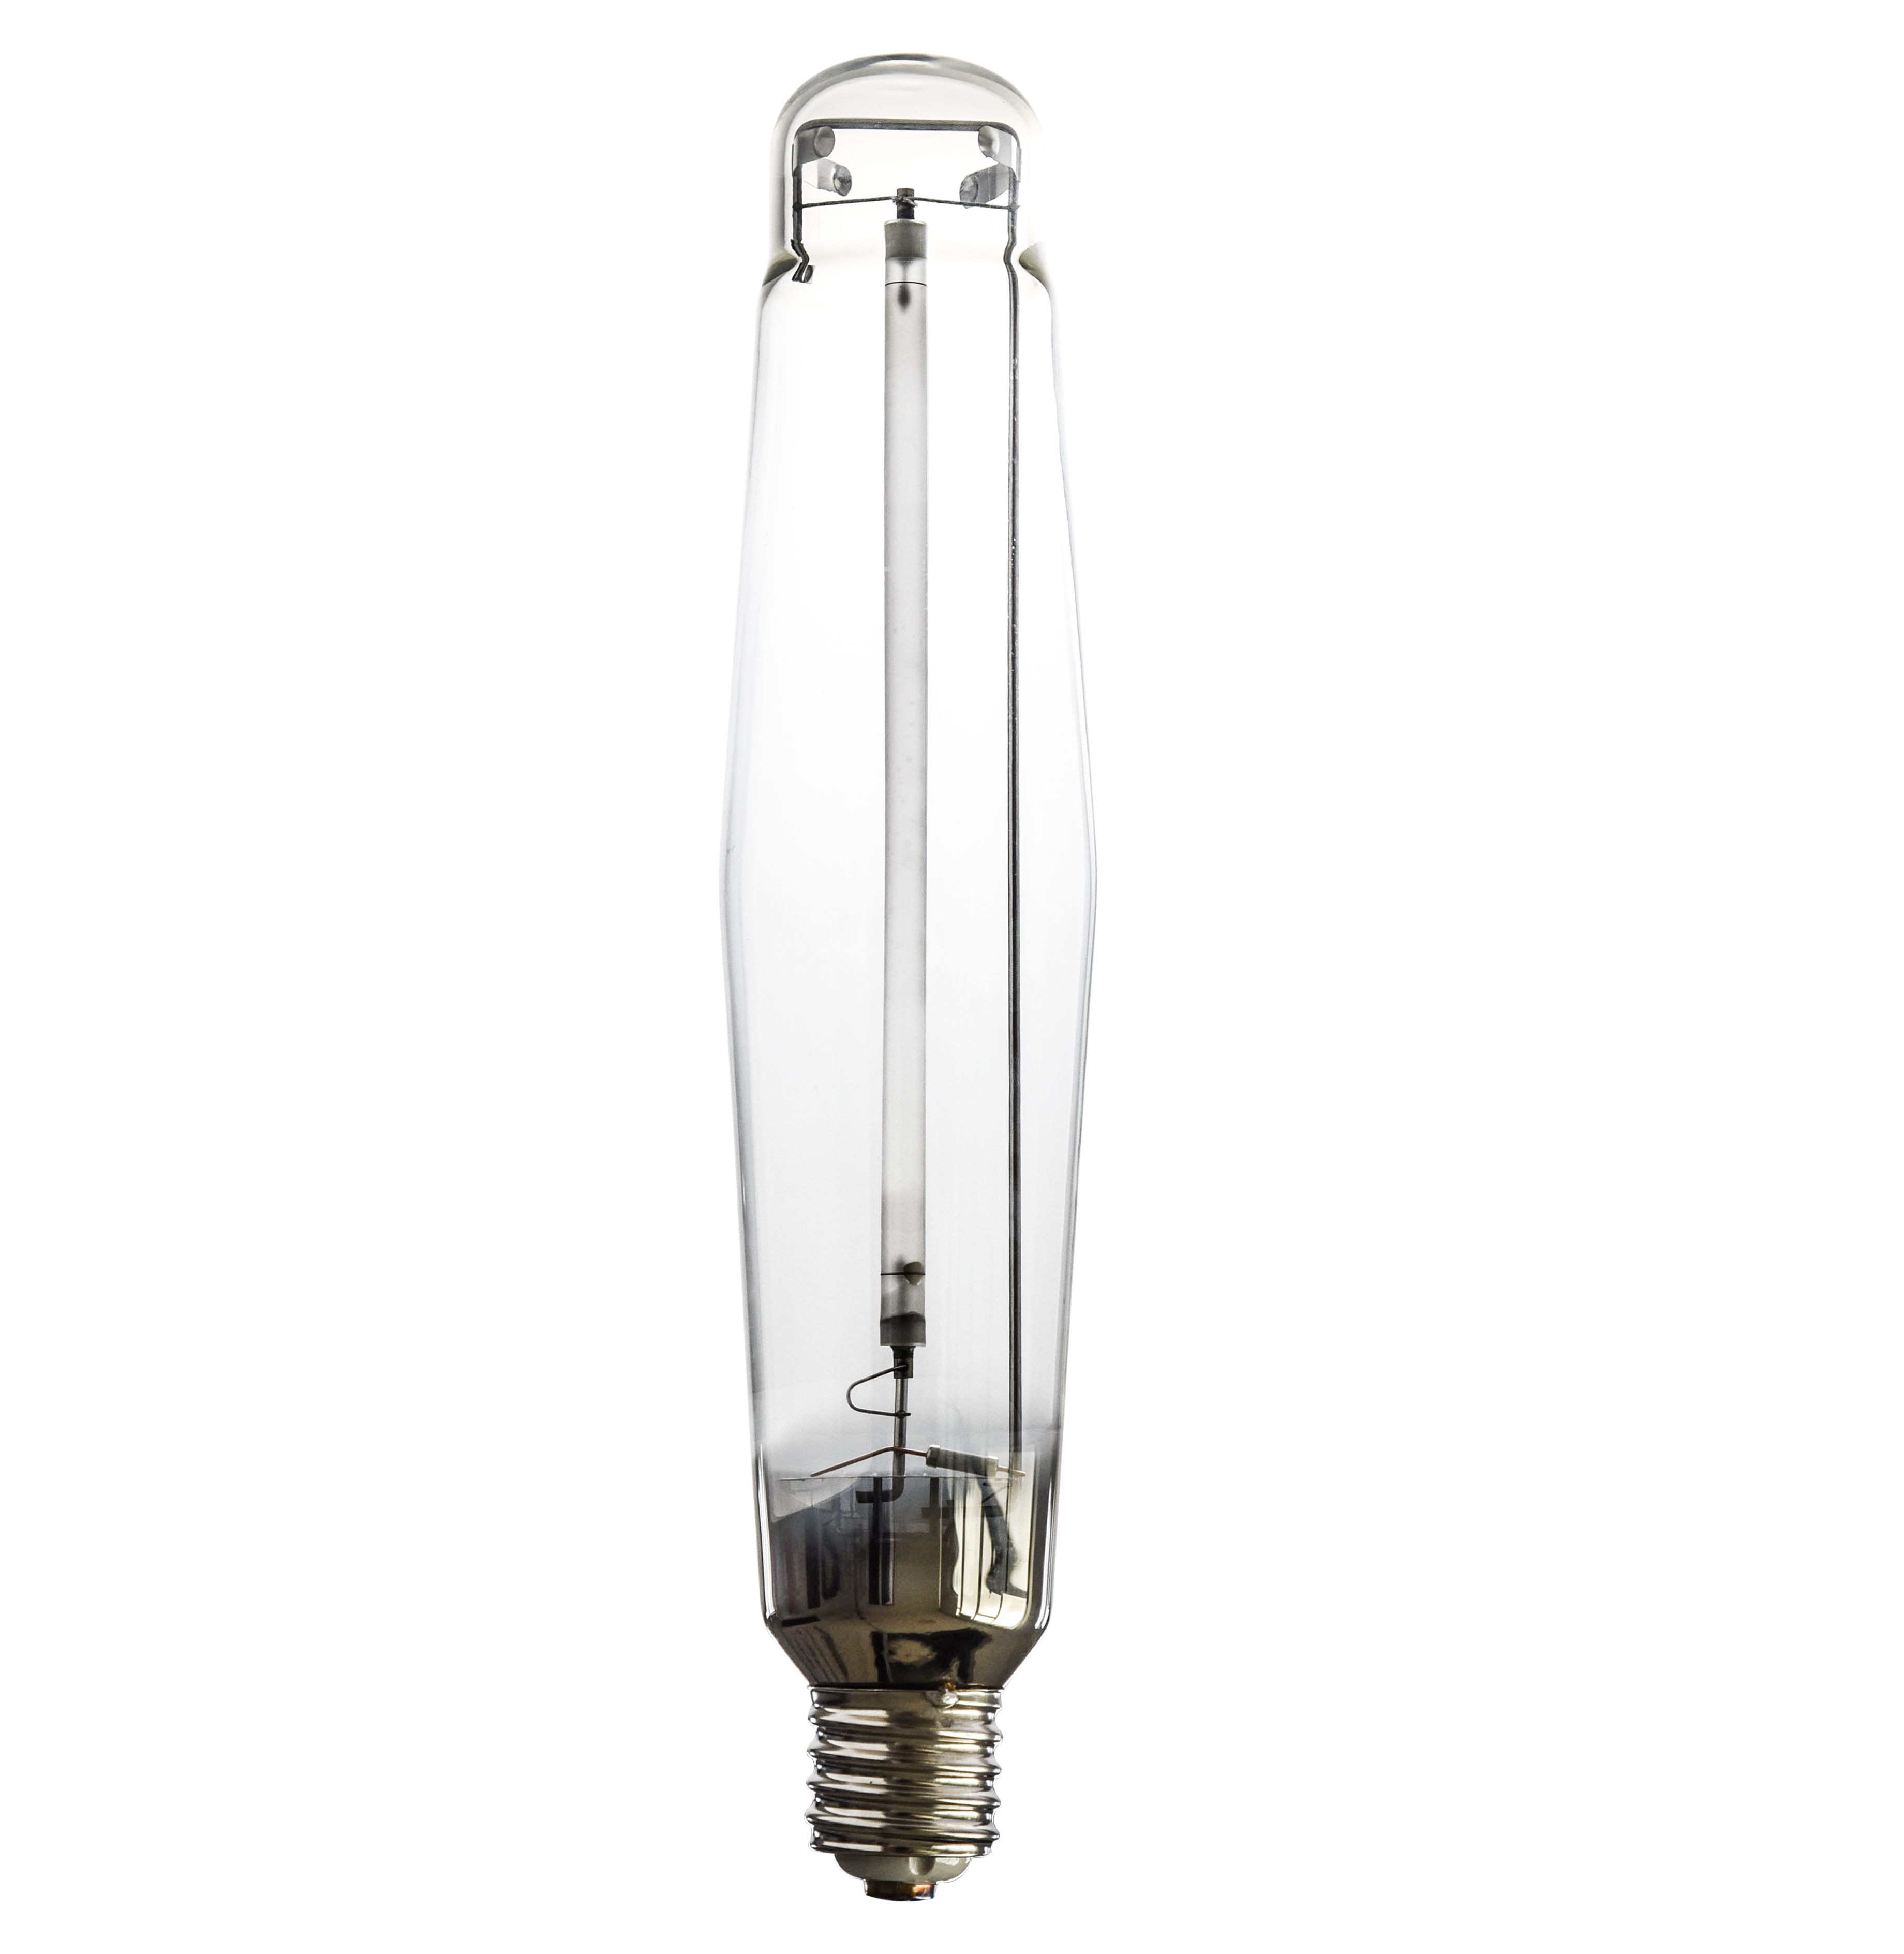 Vysokotlaková sodíková lampa HPS1000w rastie svetlo